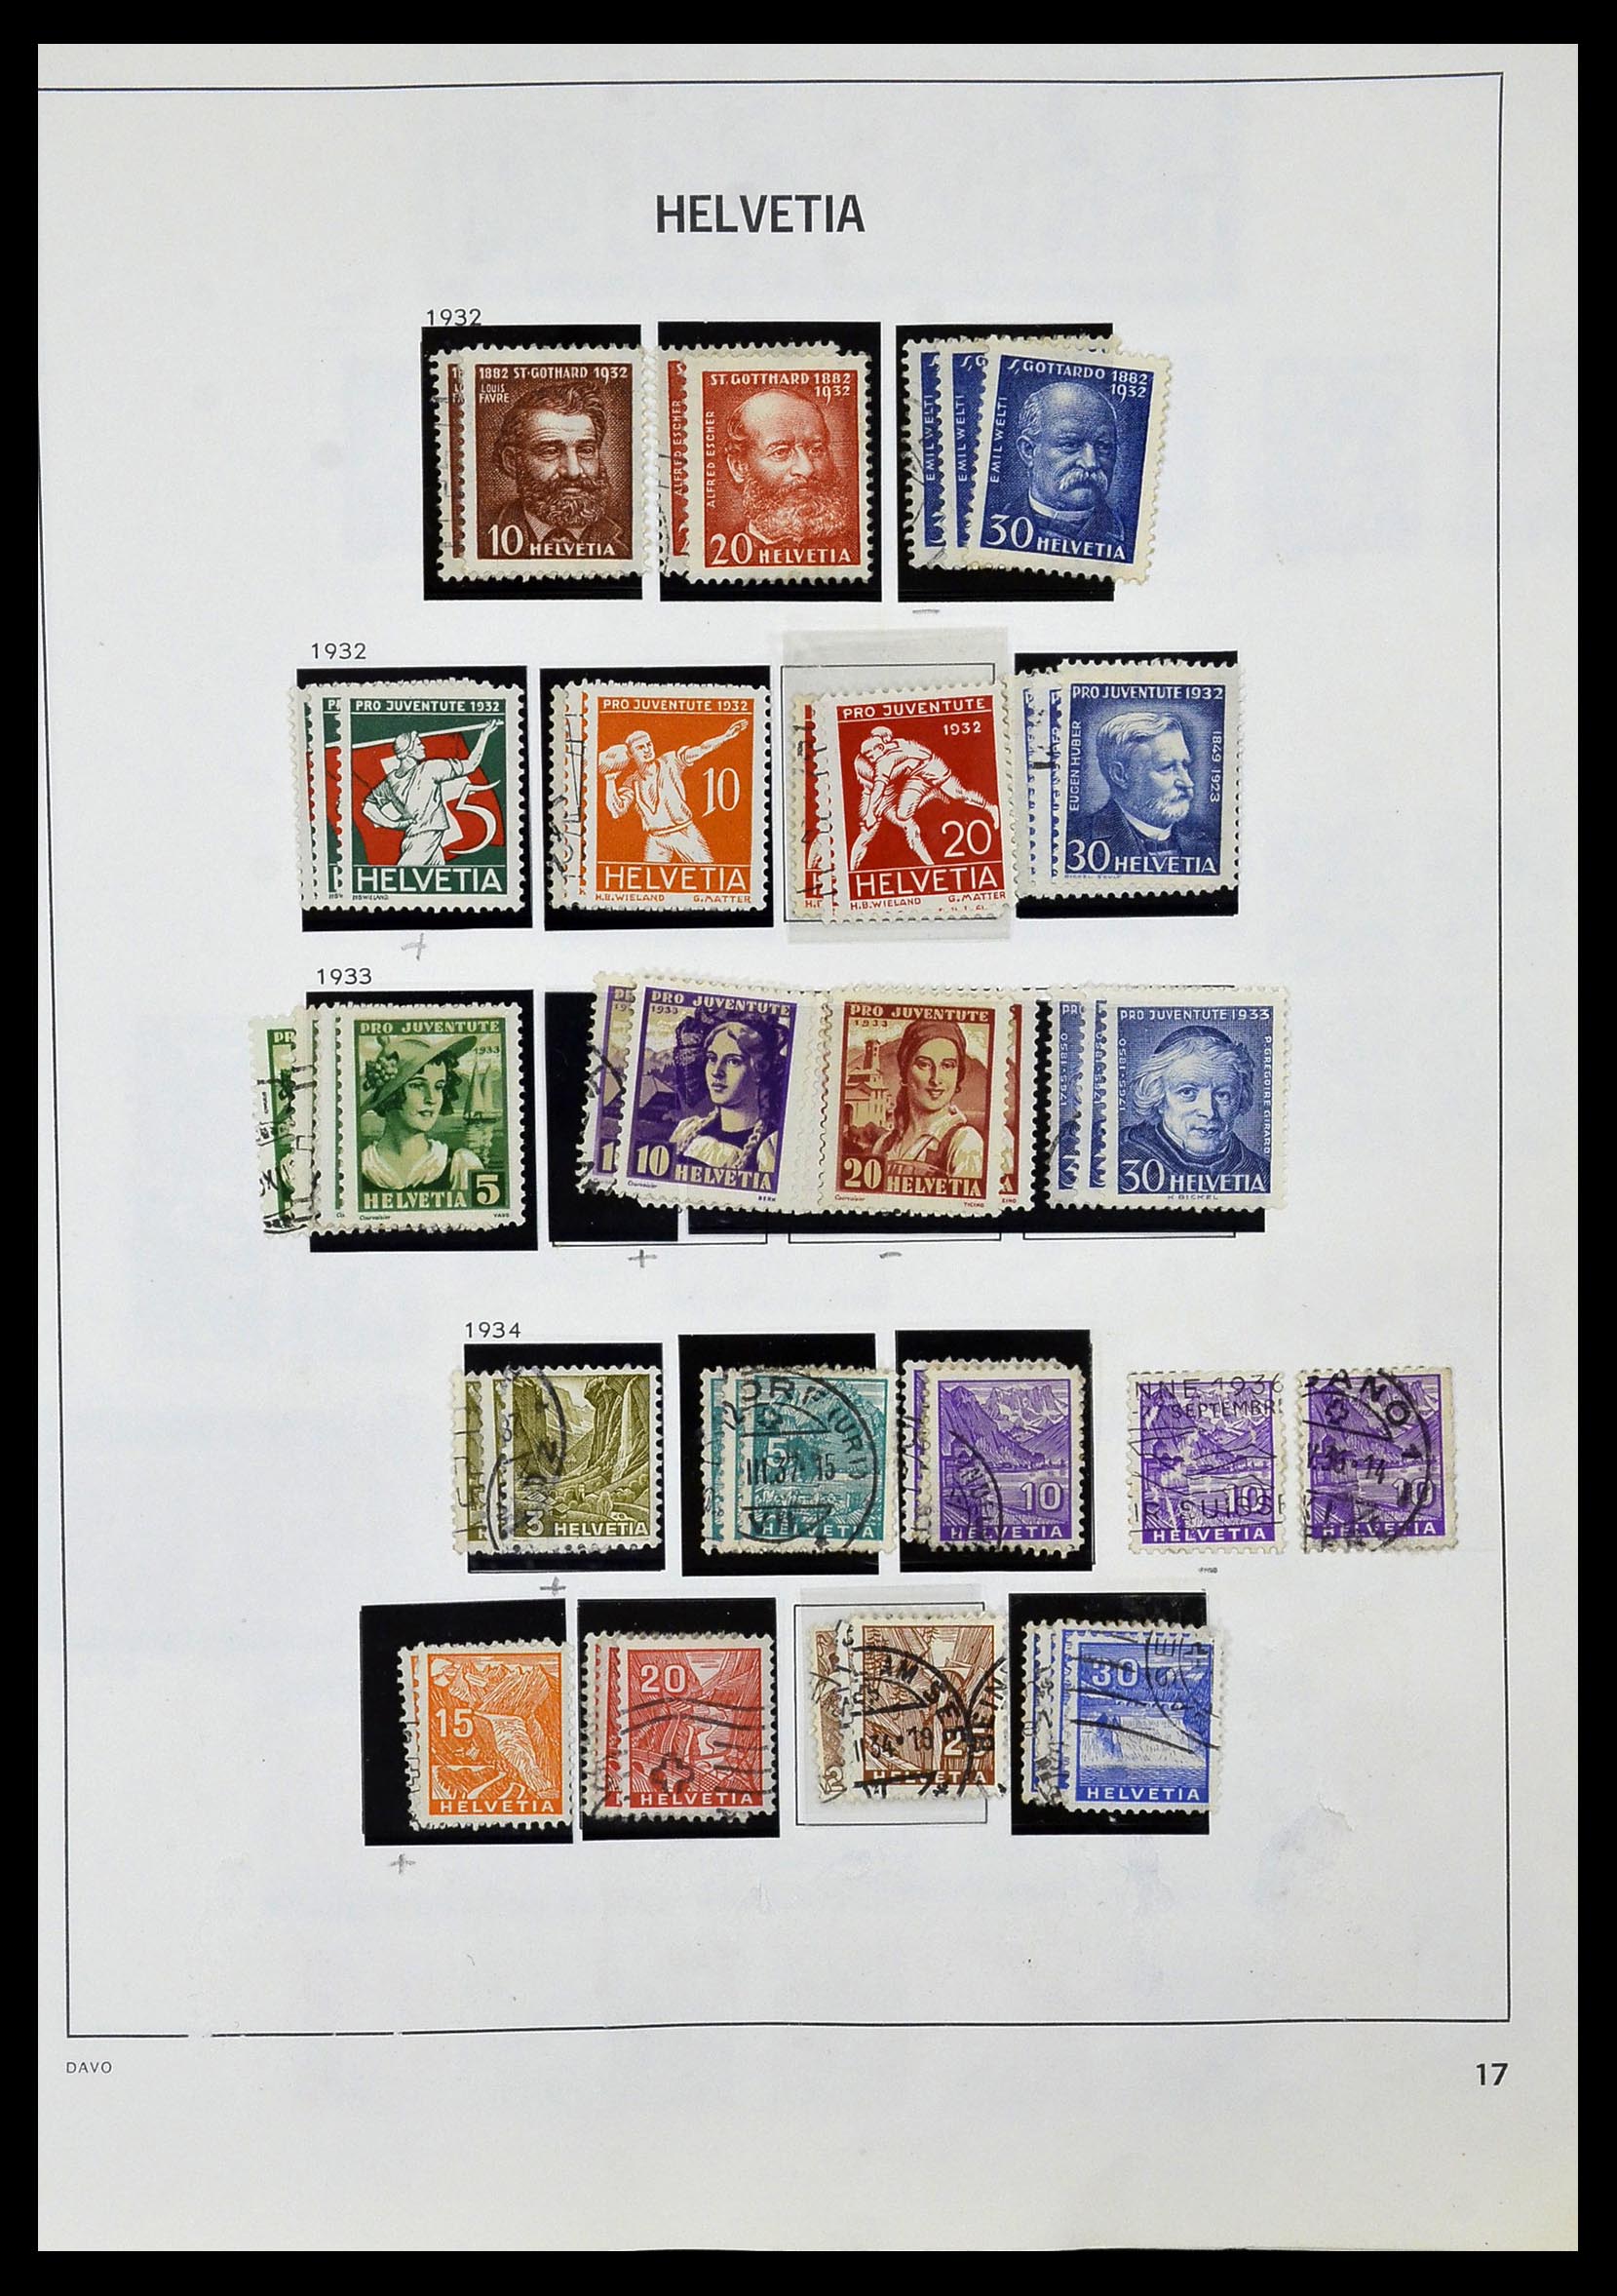 33990 023 - Stamp collection 33990 Switzerland 1854-1998.